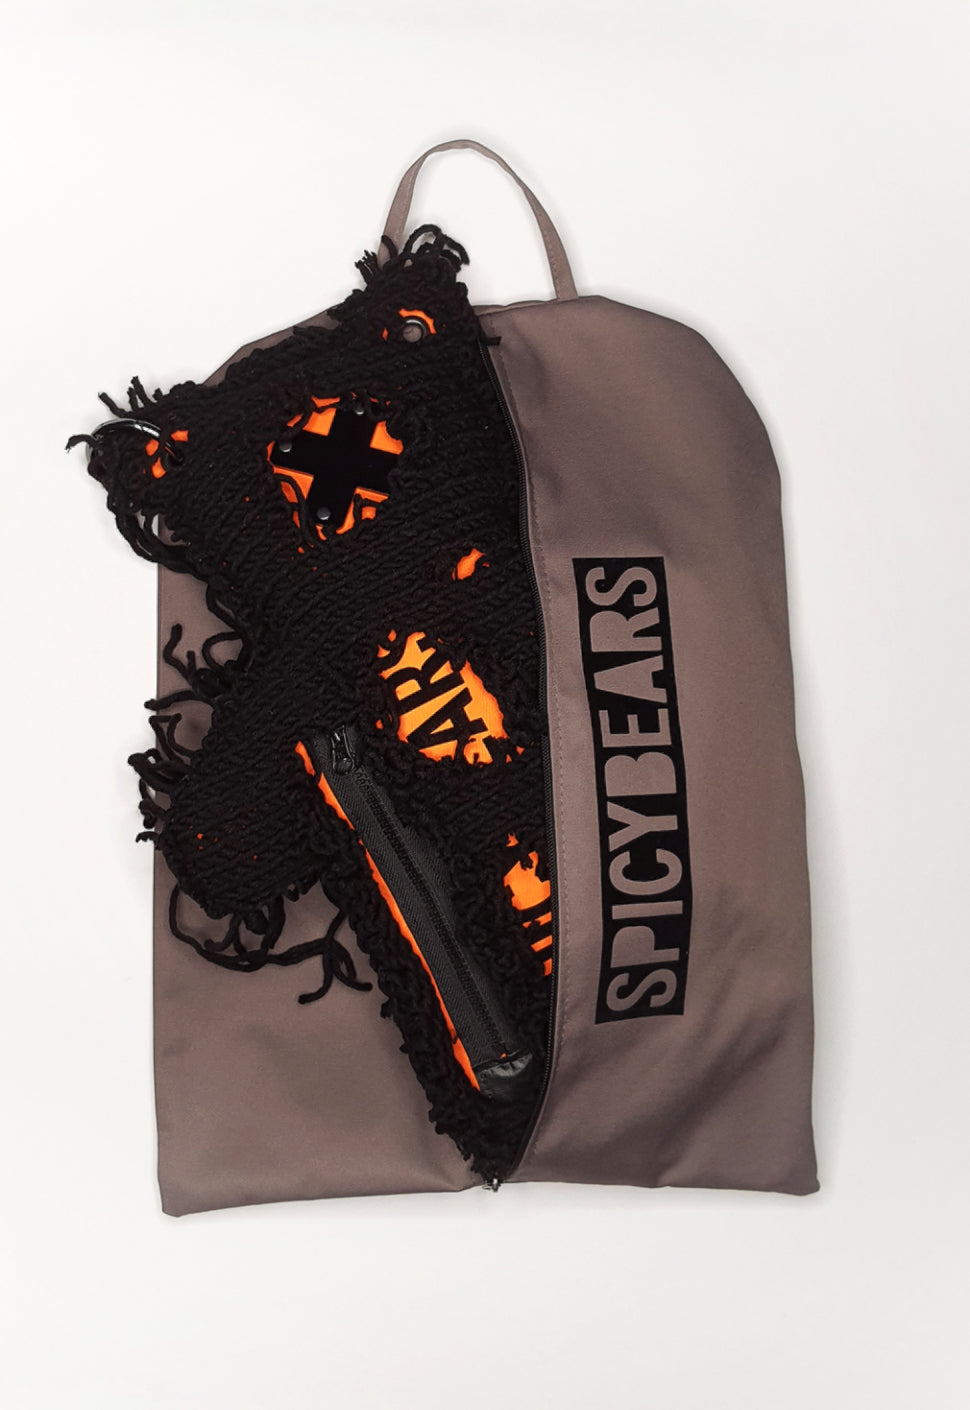 SPICYBEARS Spooky Bear Bag In Orange With Black Semi-Wool Coat - SPICYBEARS